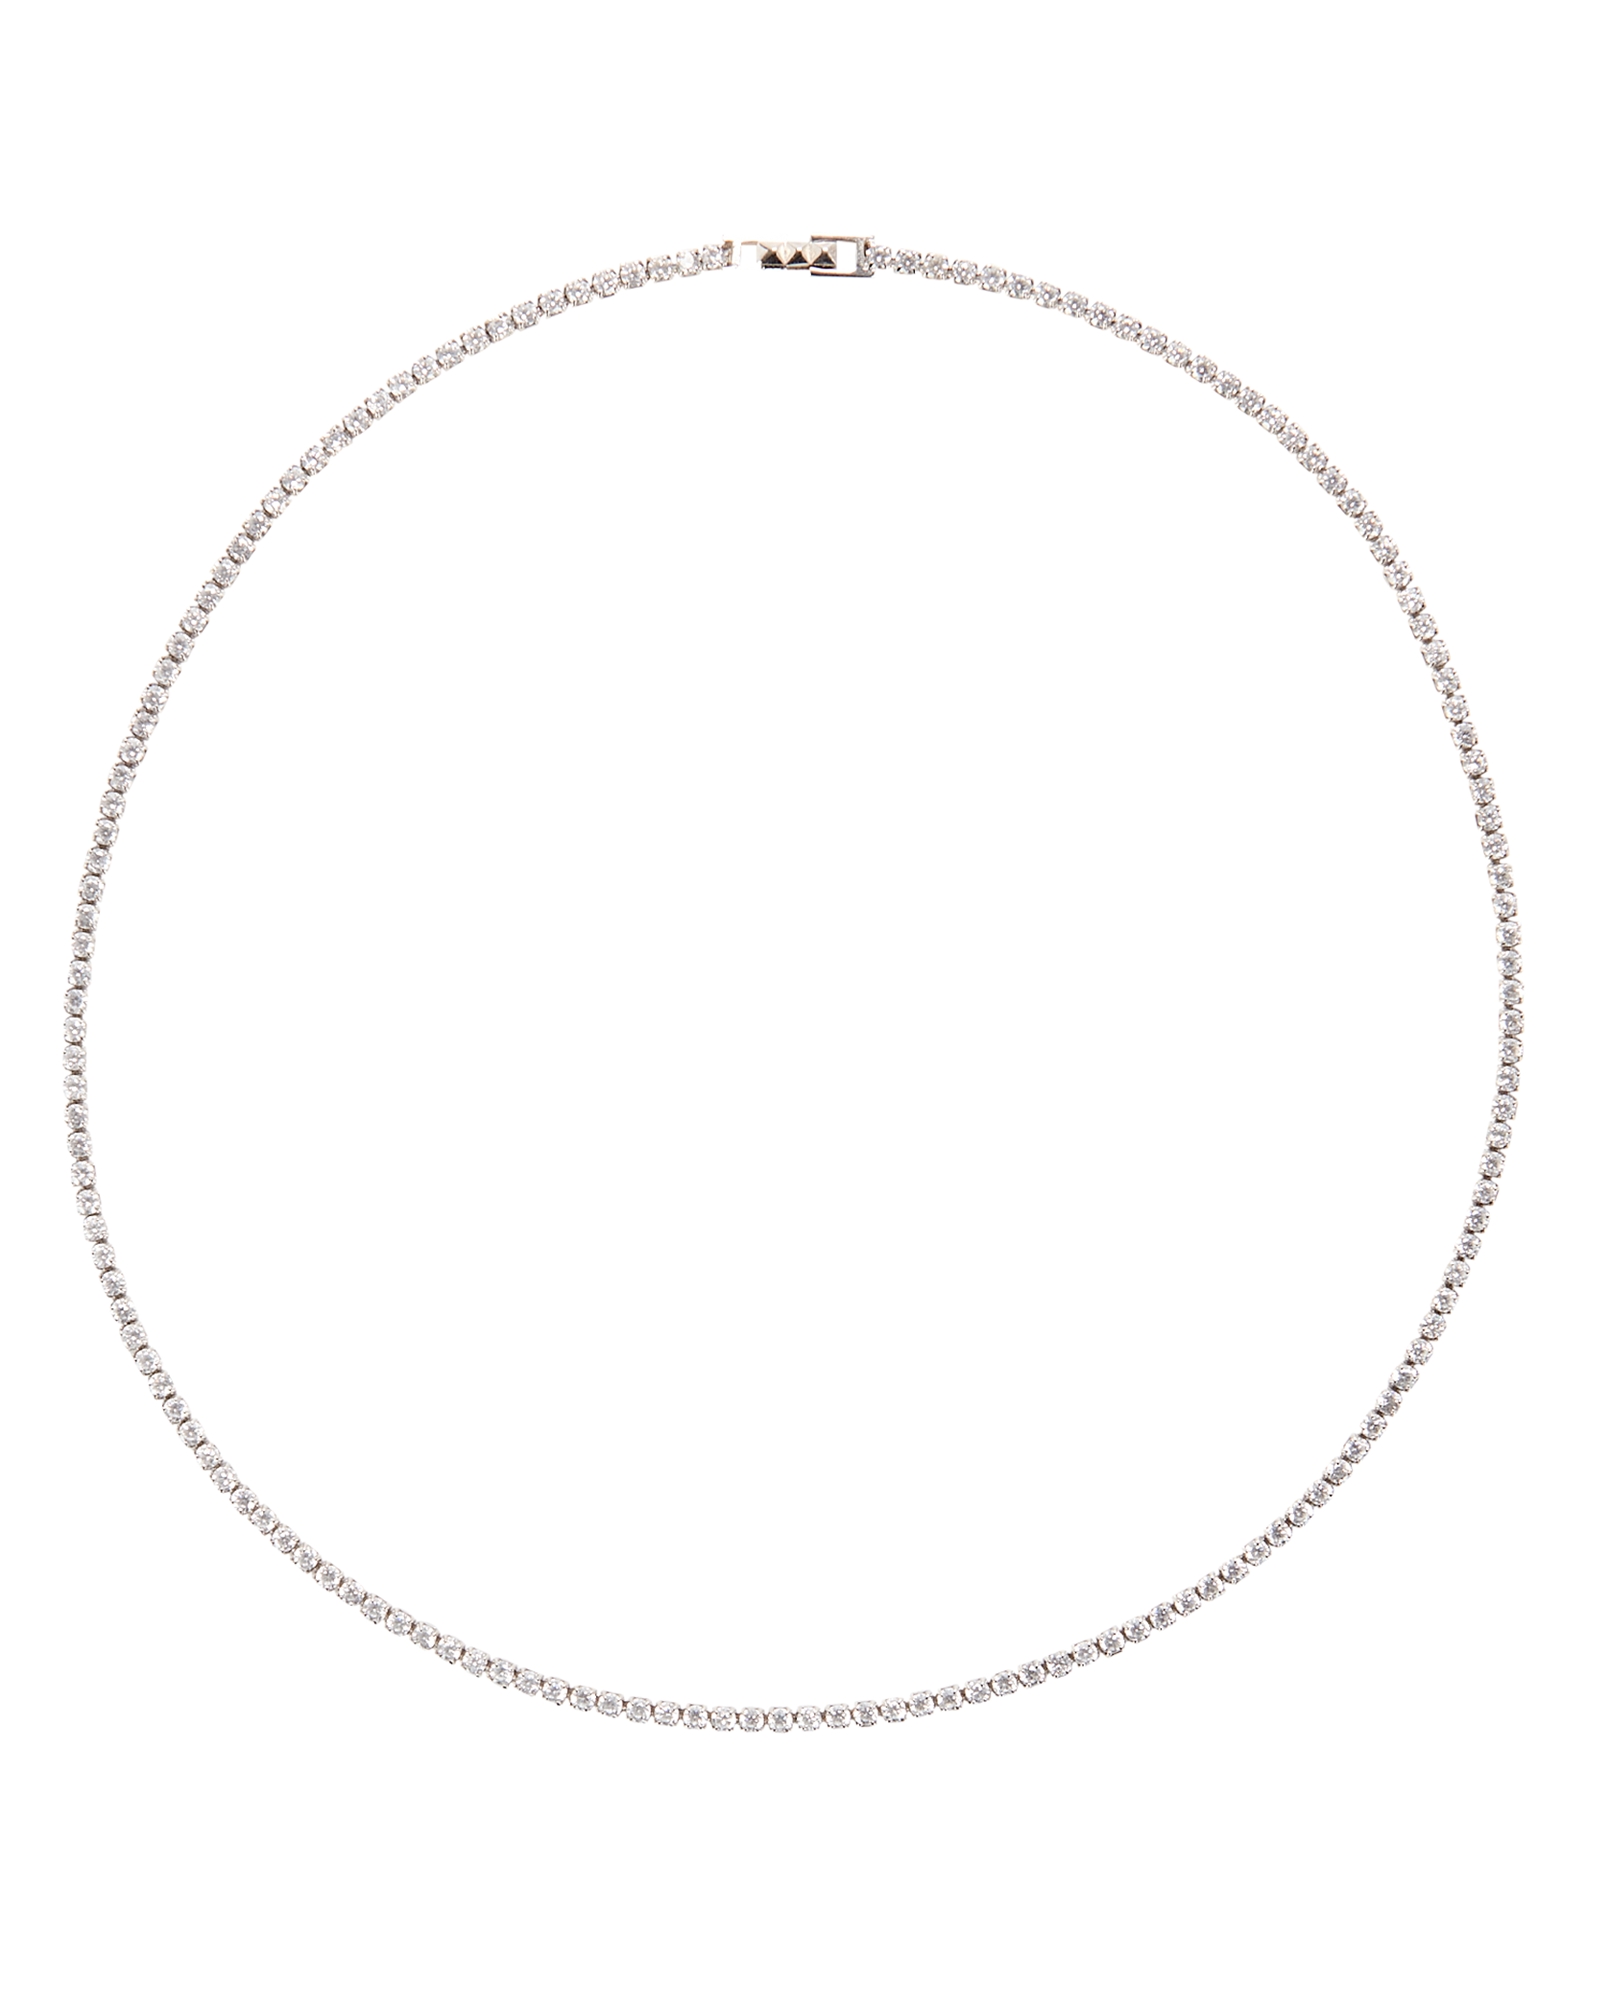 Nickho Rey Tish Crystal Tennis Necklace | INTERMIX®